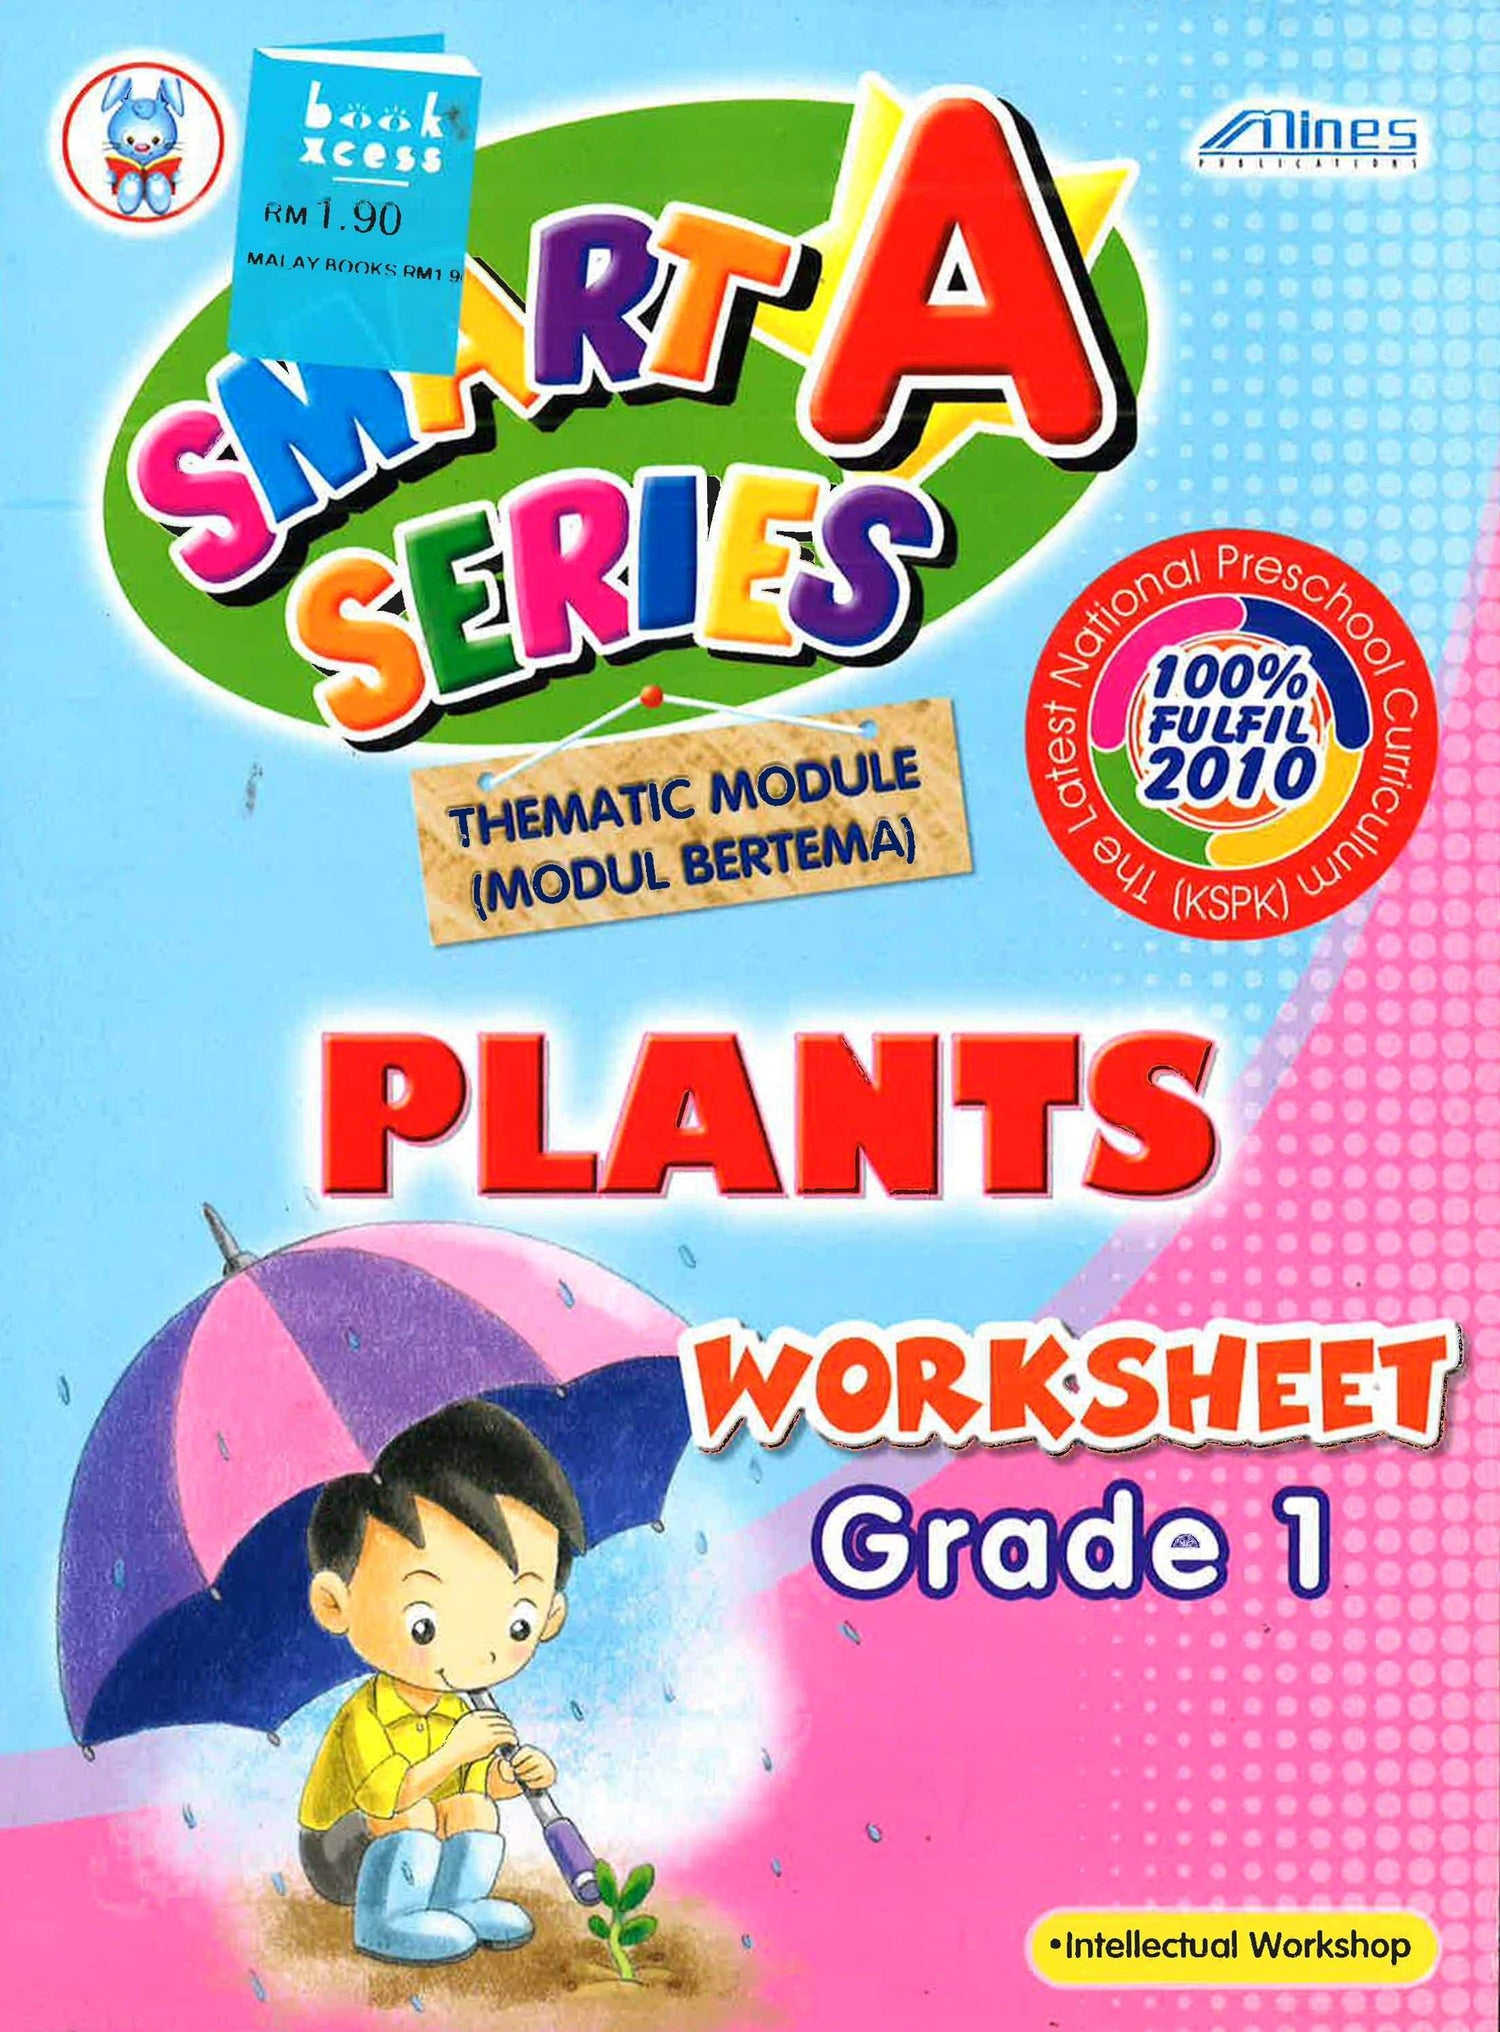 Worksheet - Plants (G1-Bi)